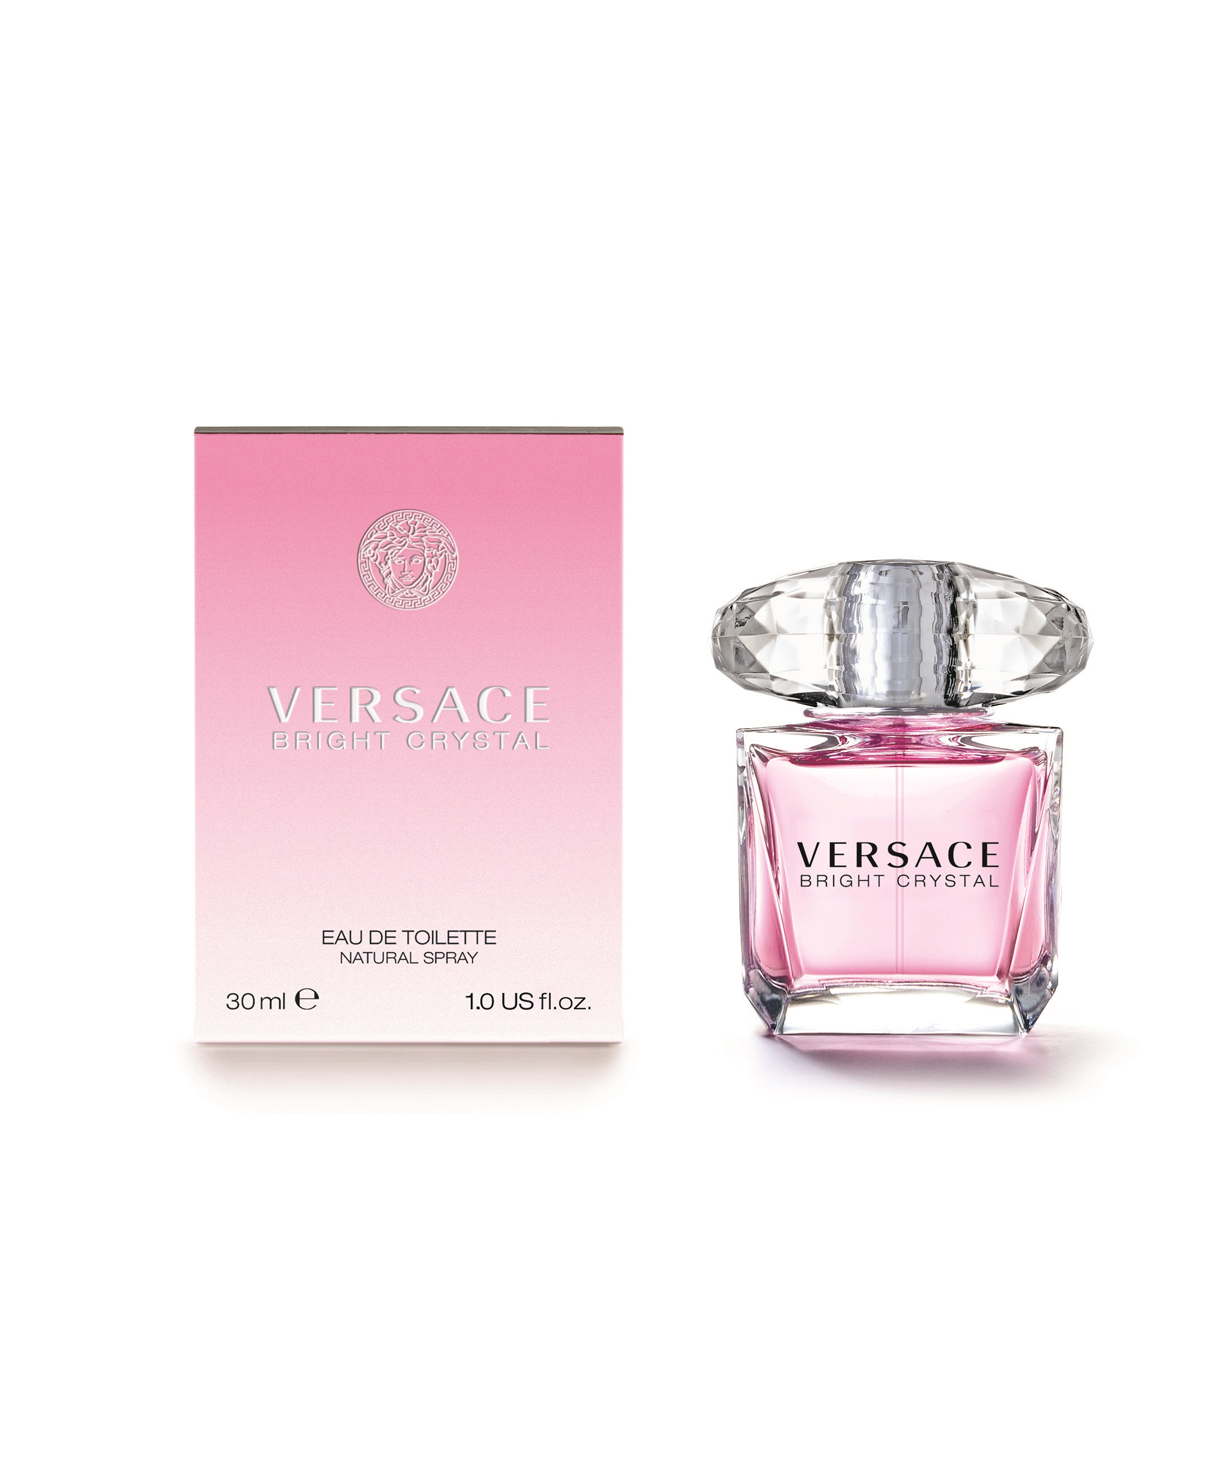 Օծանելիք «Versace» Bright Crystal, կանացի, 30 մլ